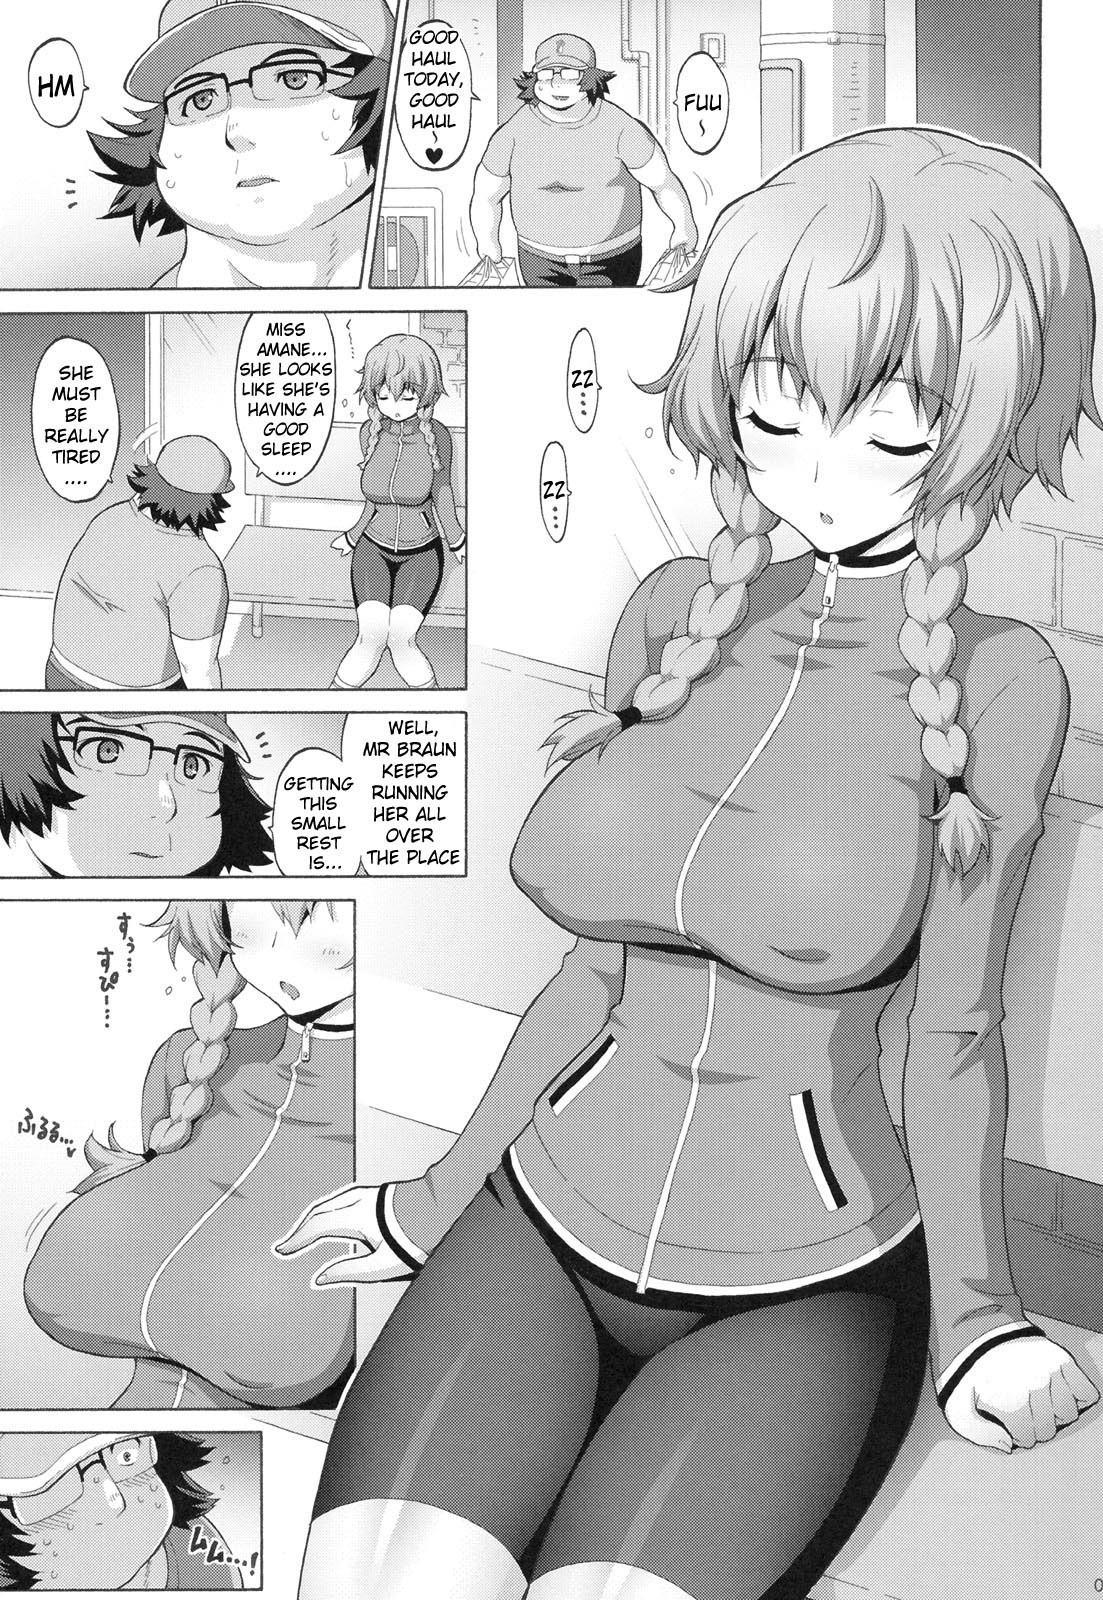 Kyonyu;Gadget hentai manga picture 2